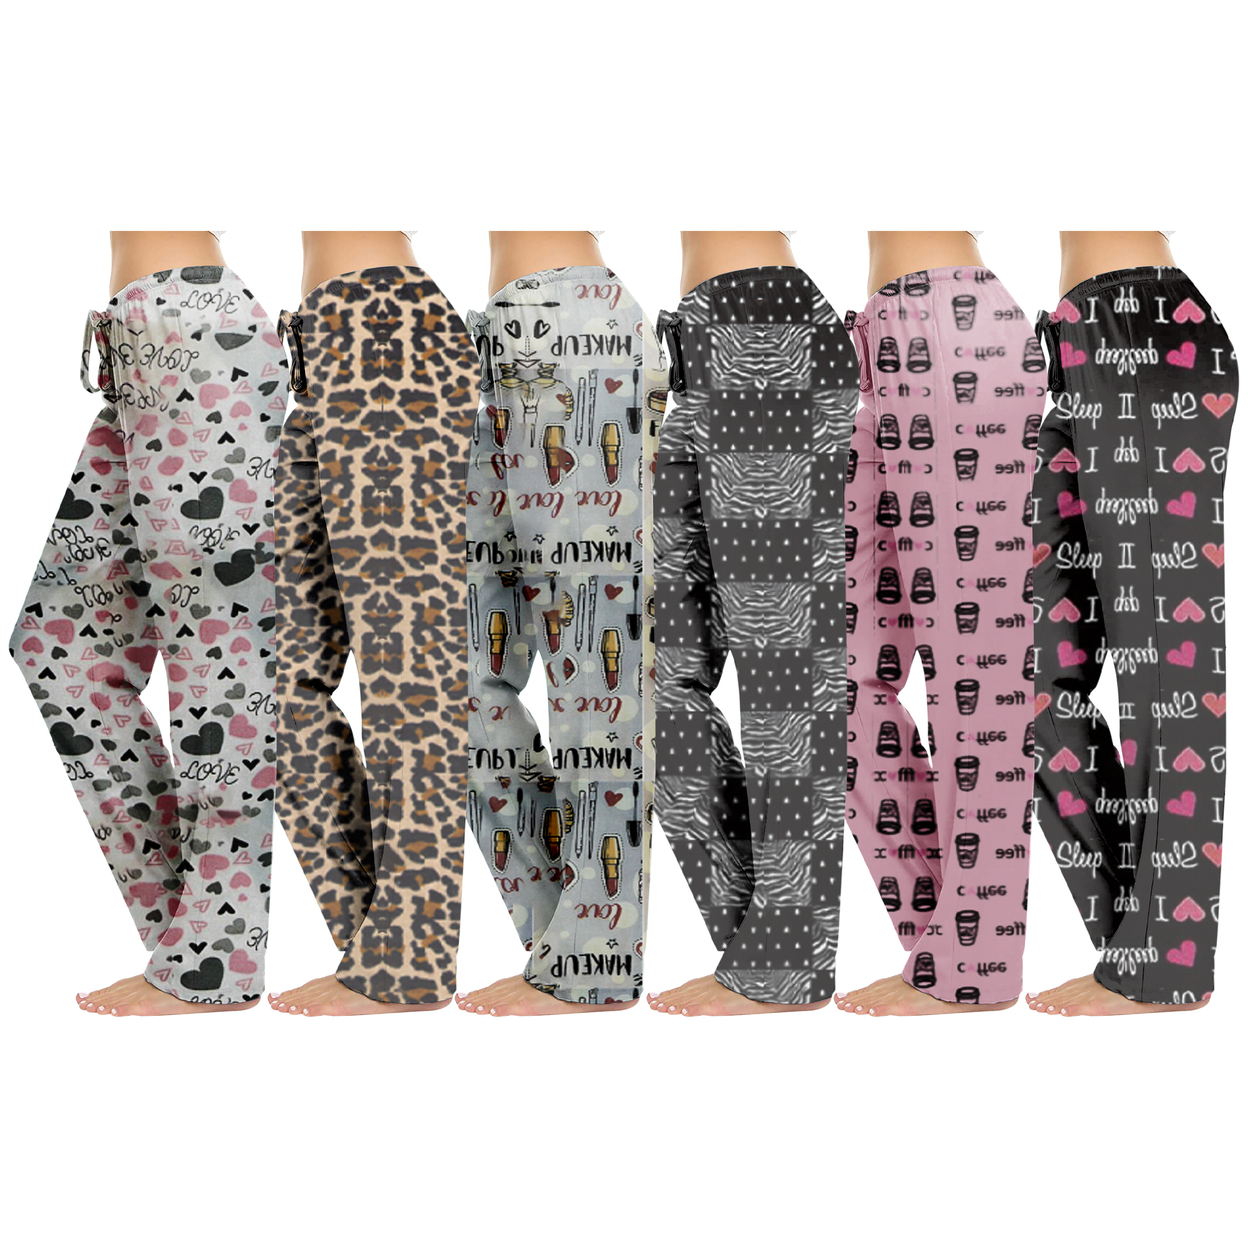 2-Pack: Women's Casual Fun Printed Lightweight Lounge Terry Knit Pajama Bottom Pants - Large, Love